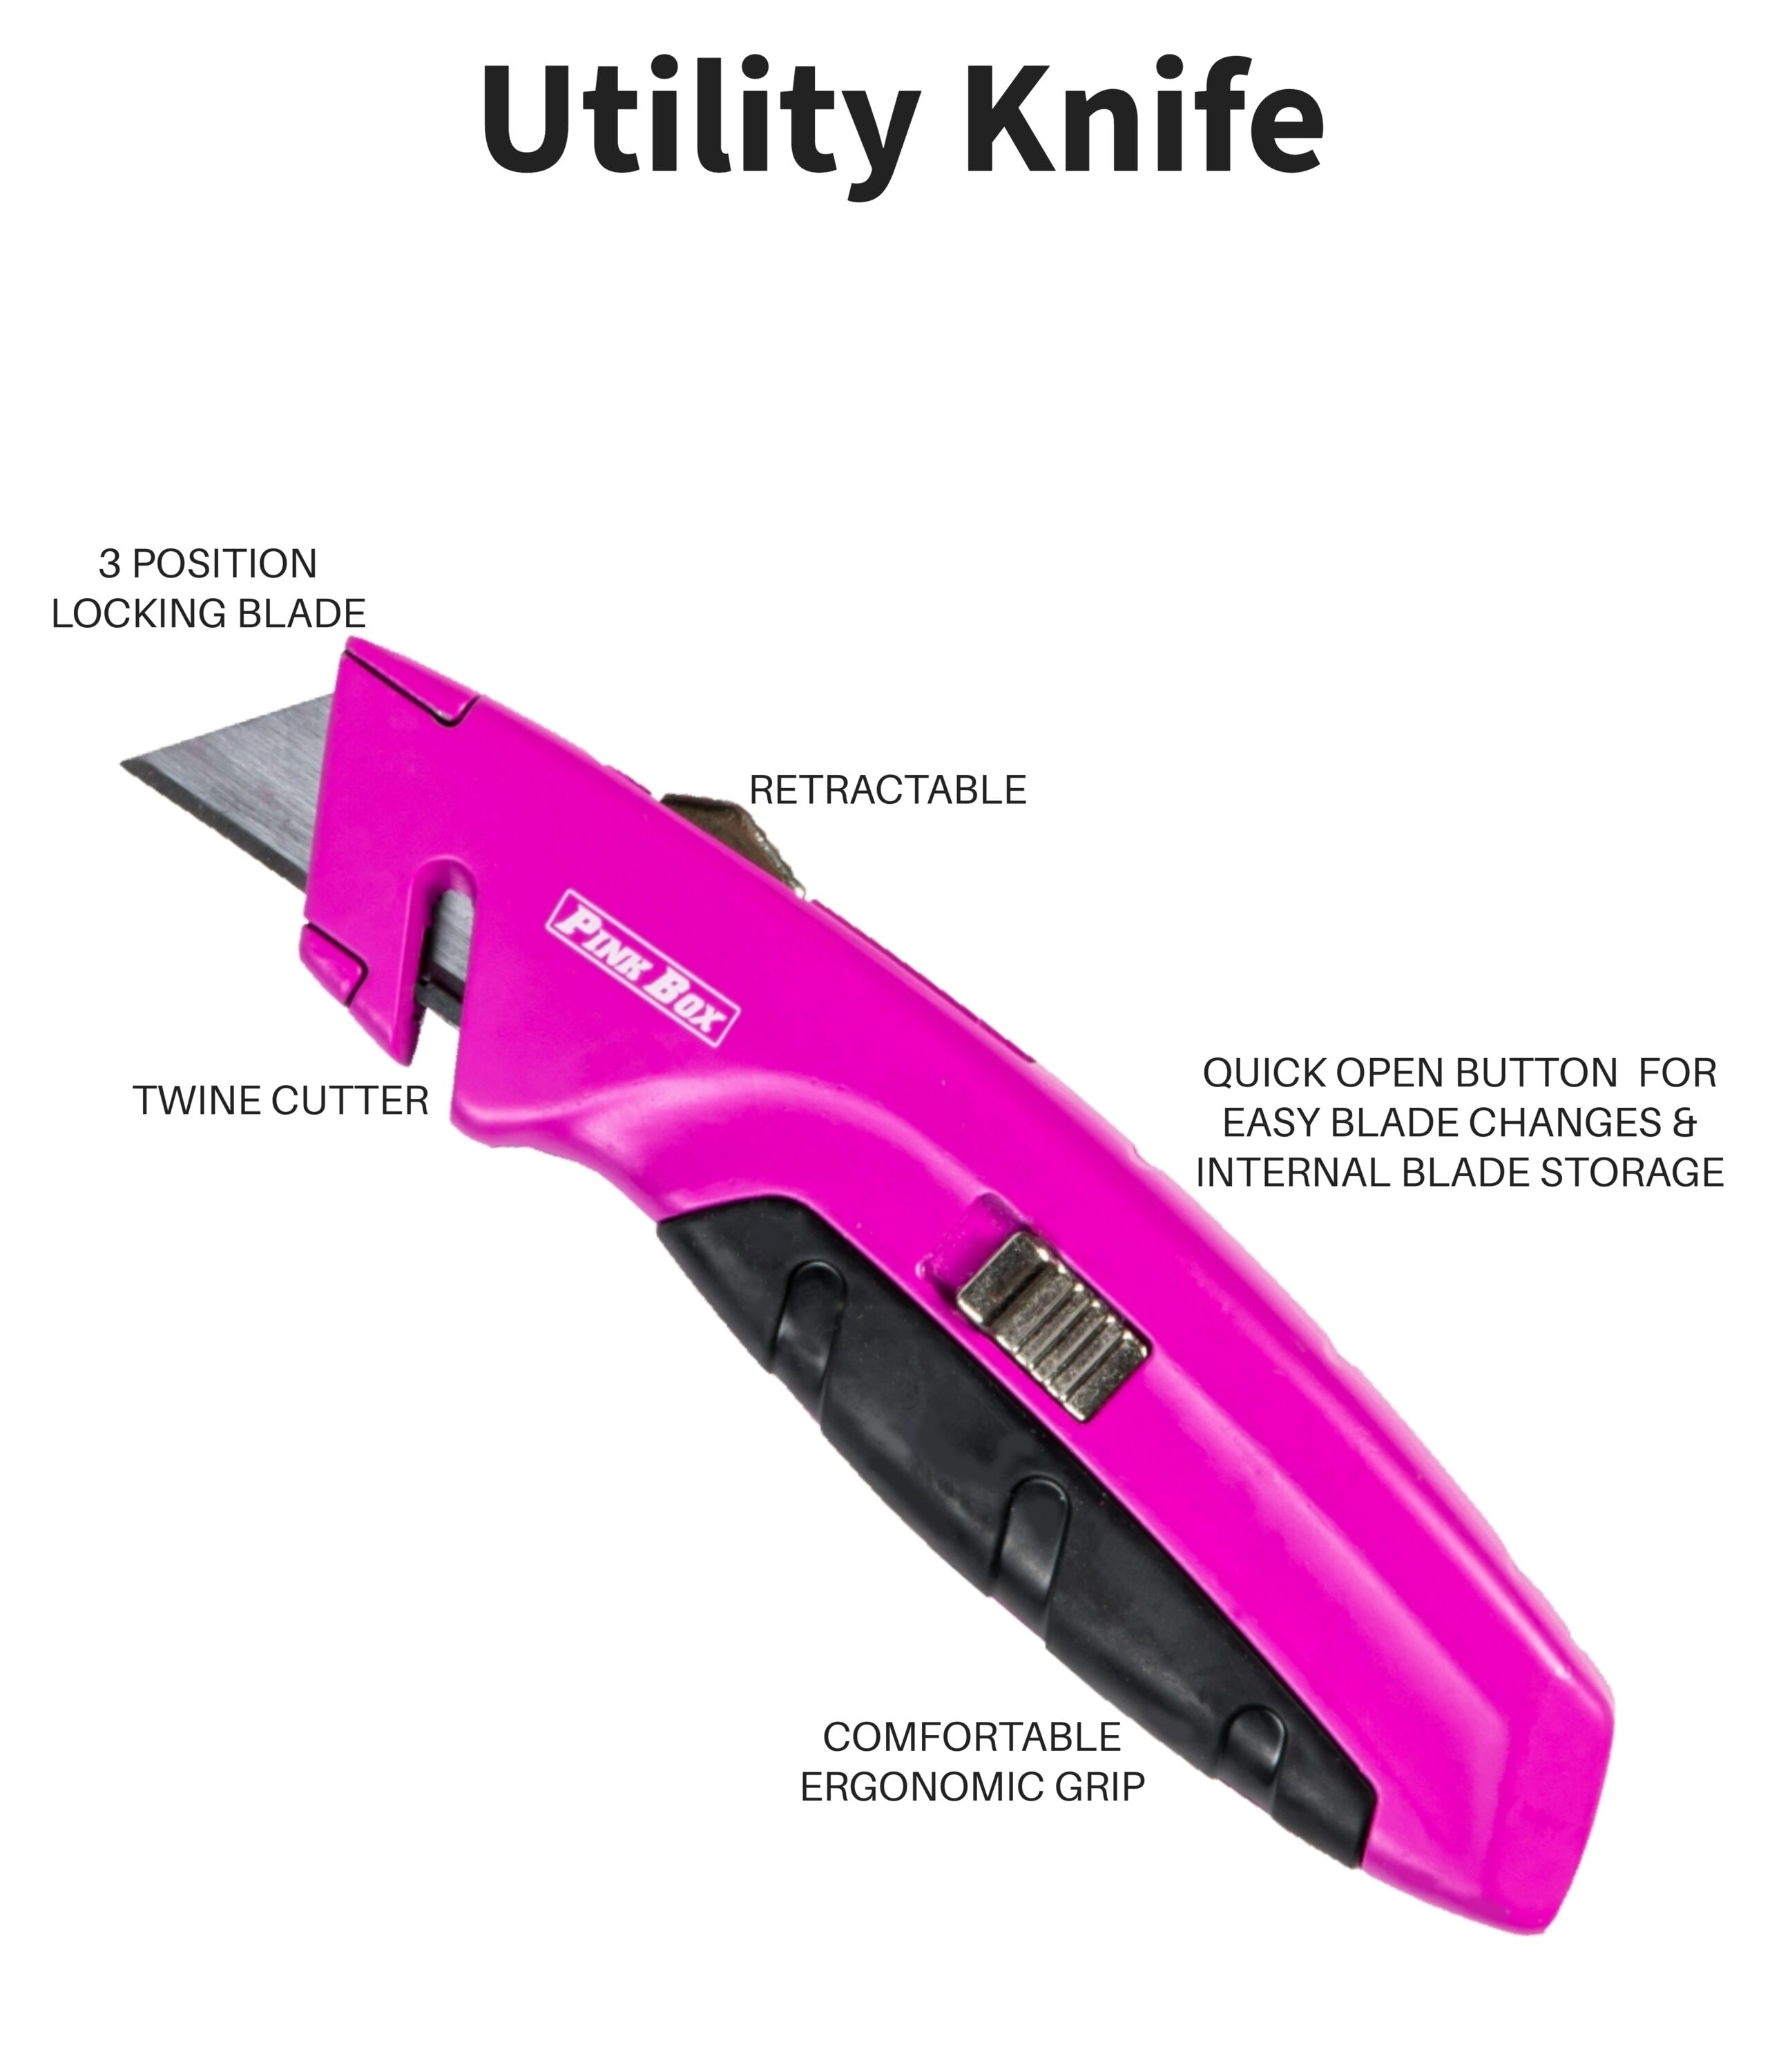 The Original Pink Box 25-Foot Auto-Locking Tape Measure, Pink 